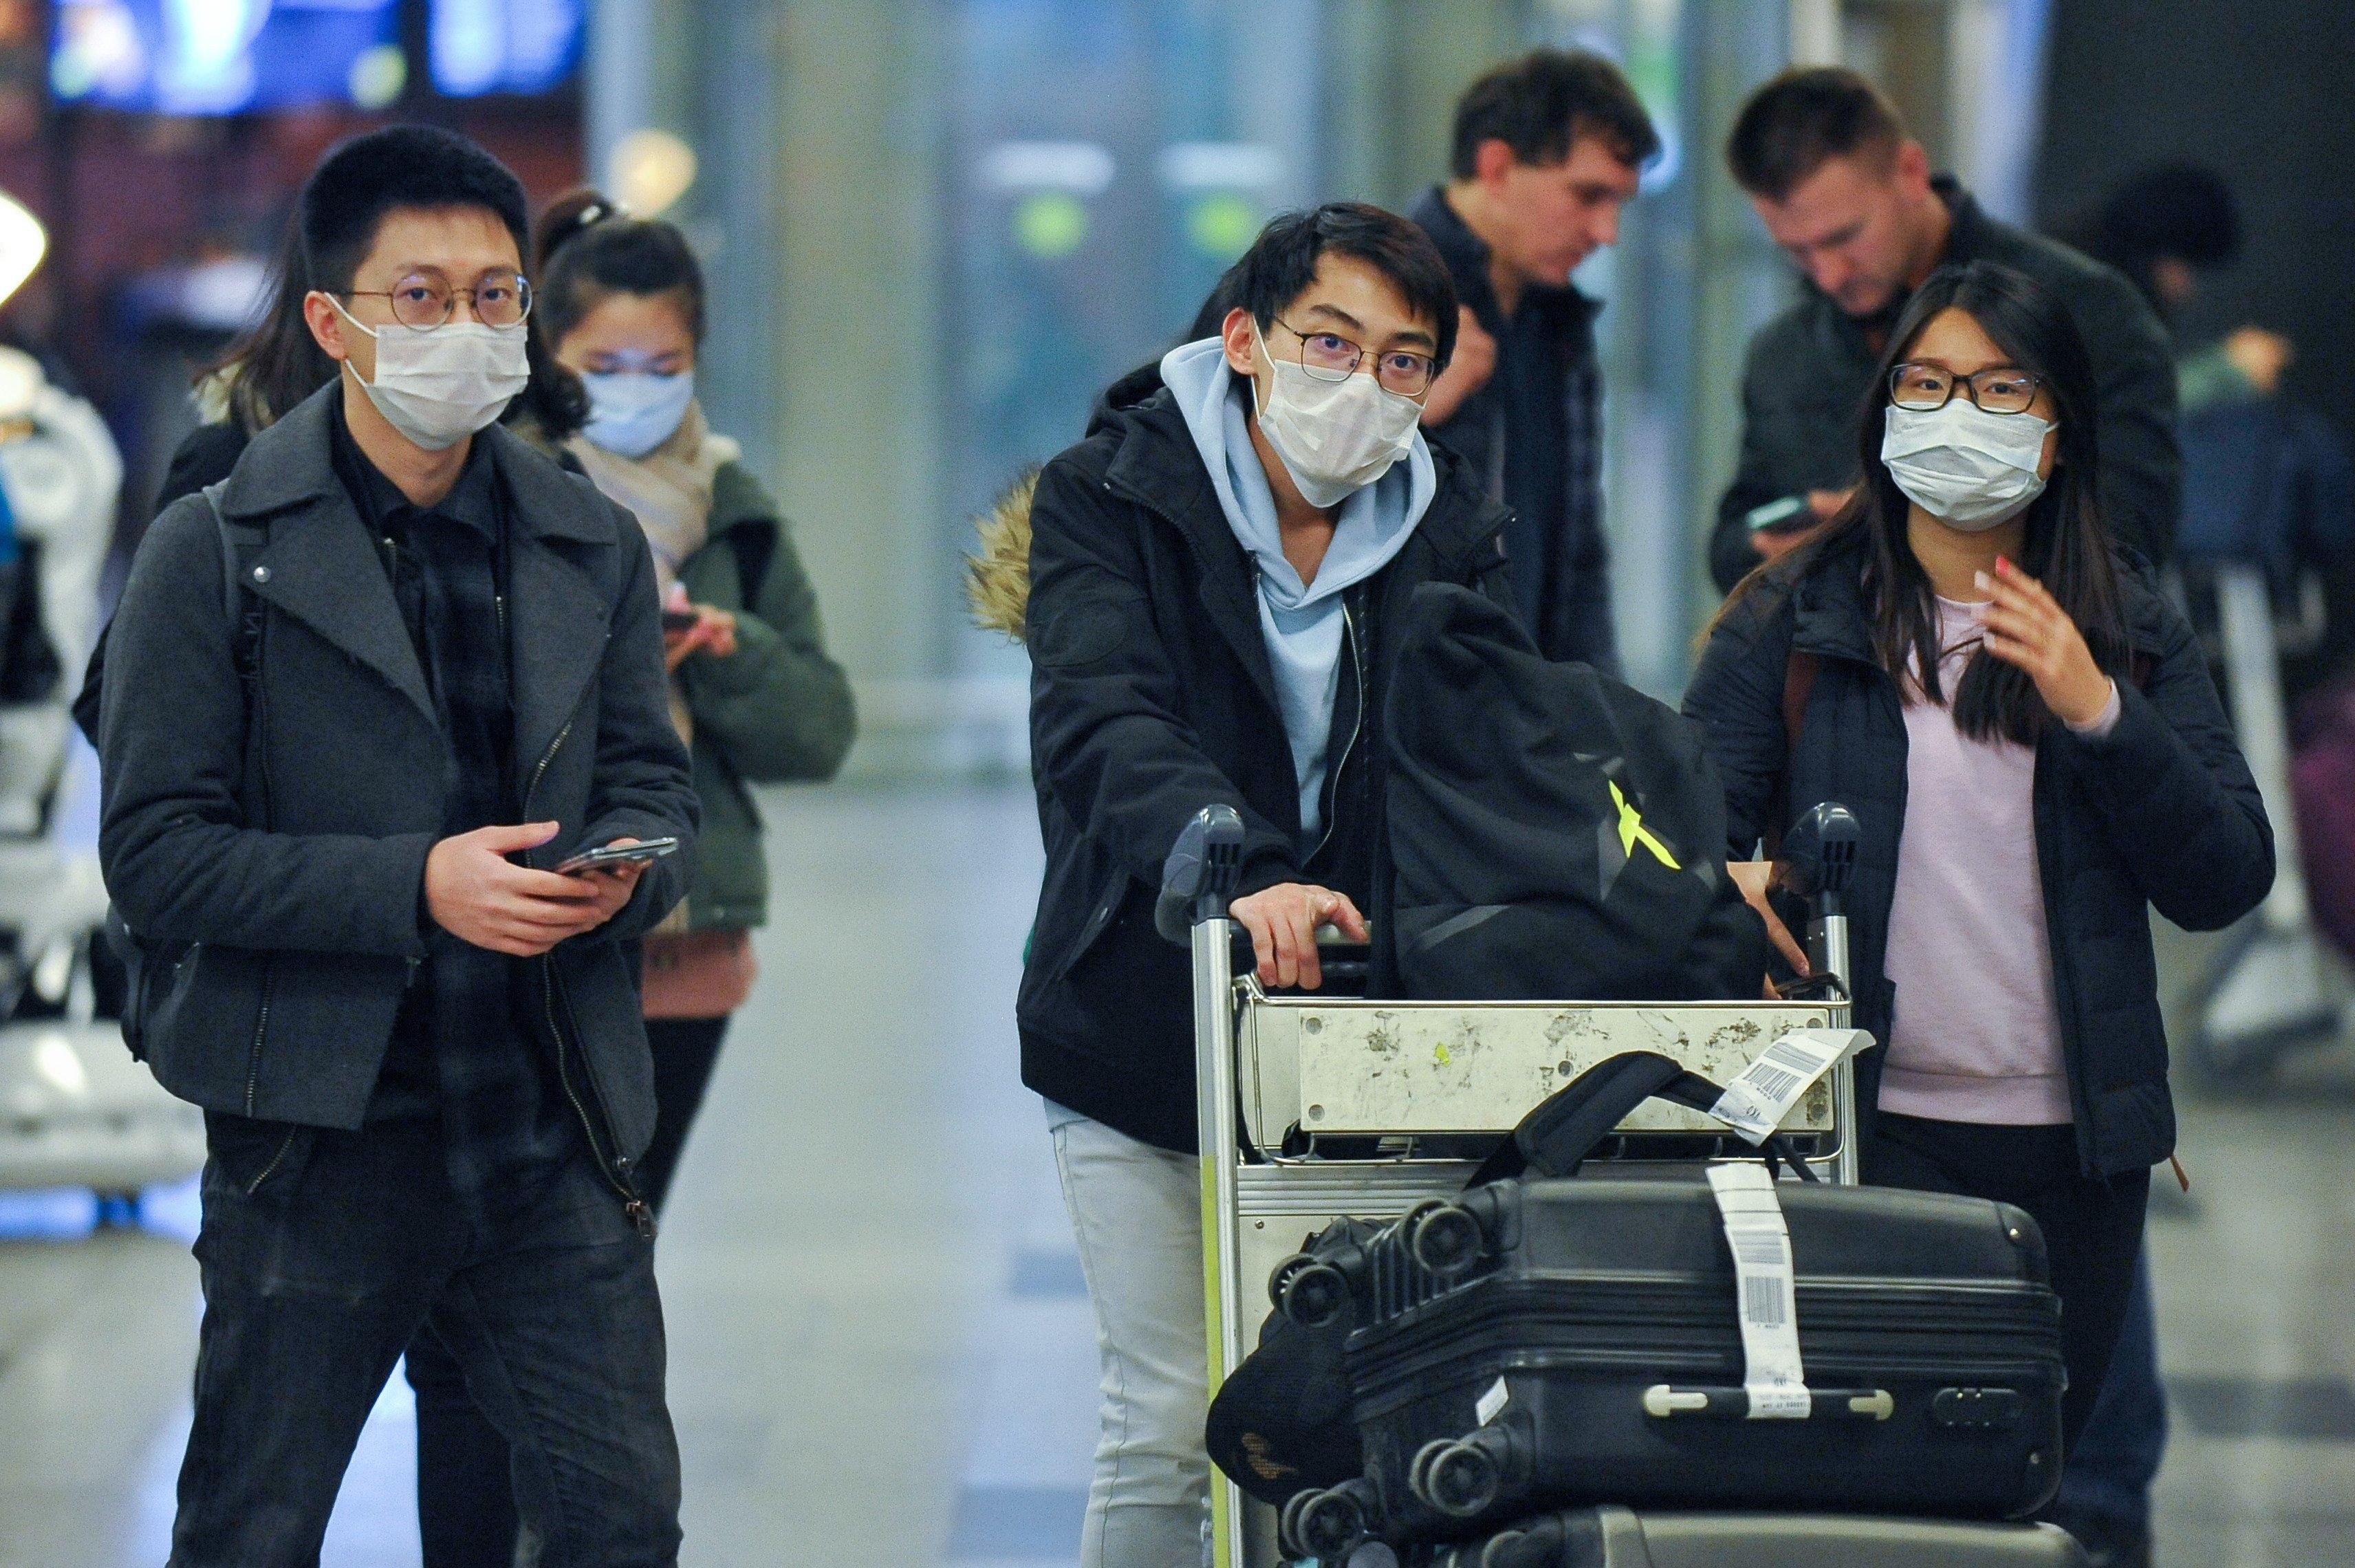 Китаец переехал. Китайцы в аэропорту. Туристы из Китая. Китайские туристы. Китайцы в масках в аэропорту.